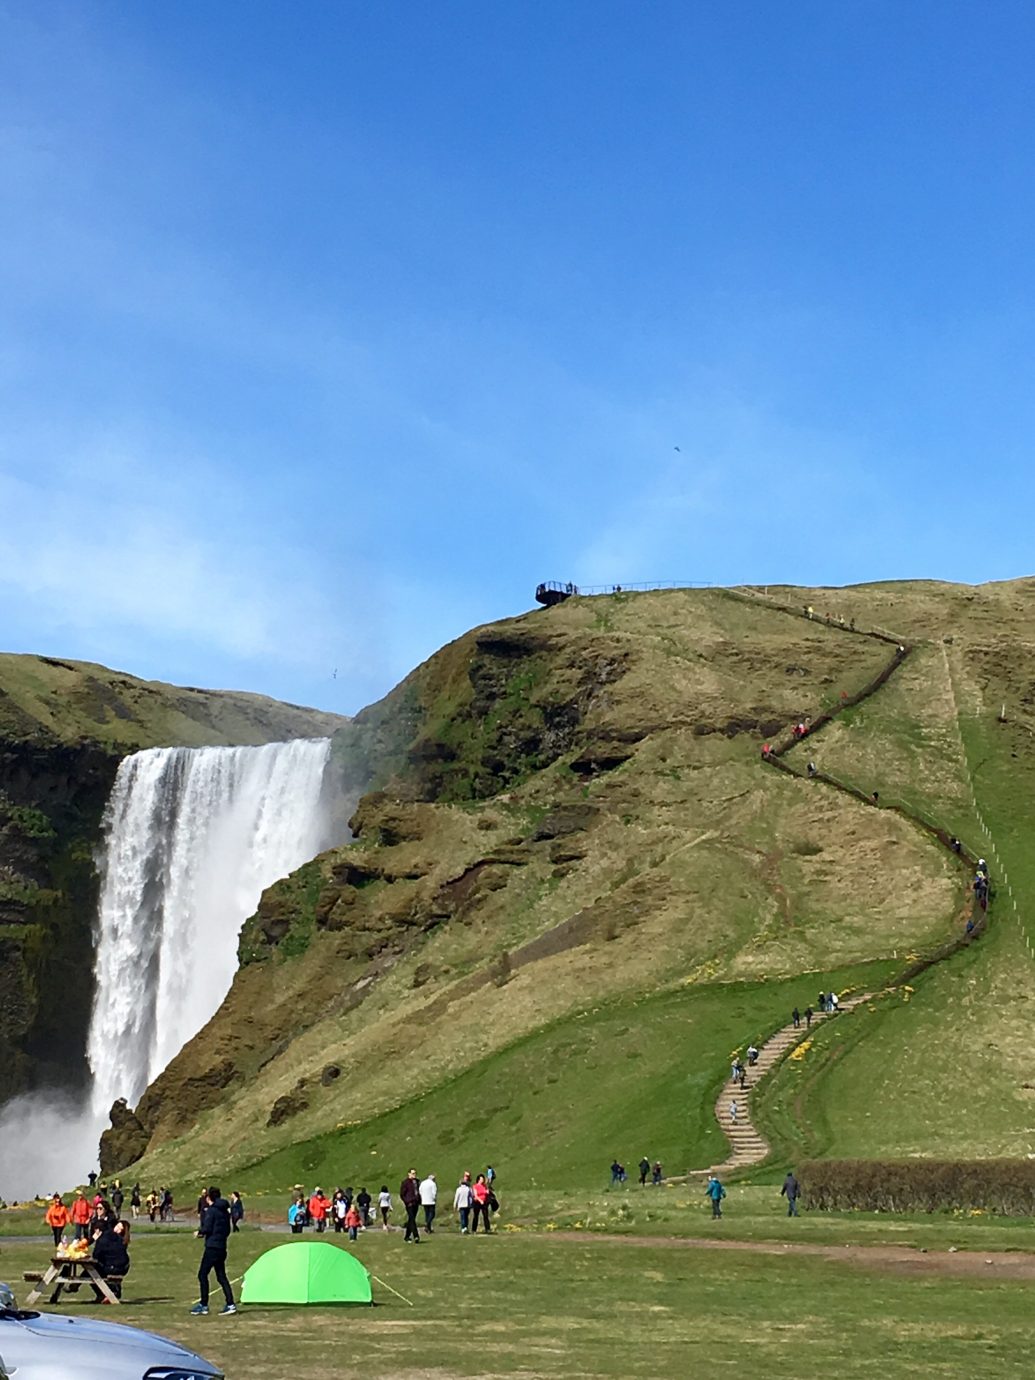 Skógafoss Waterfall in Iceland